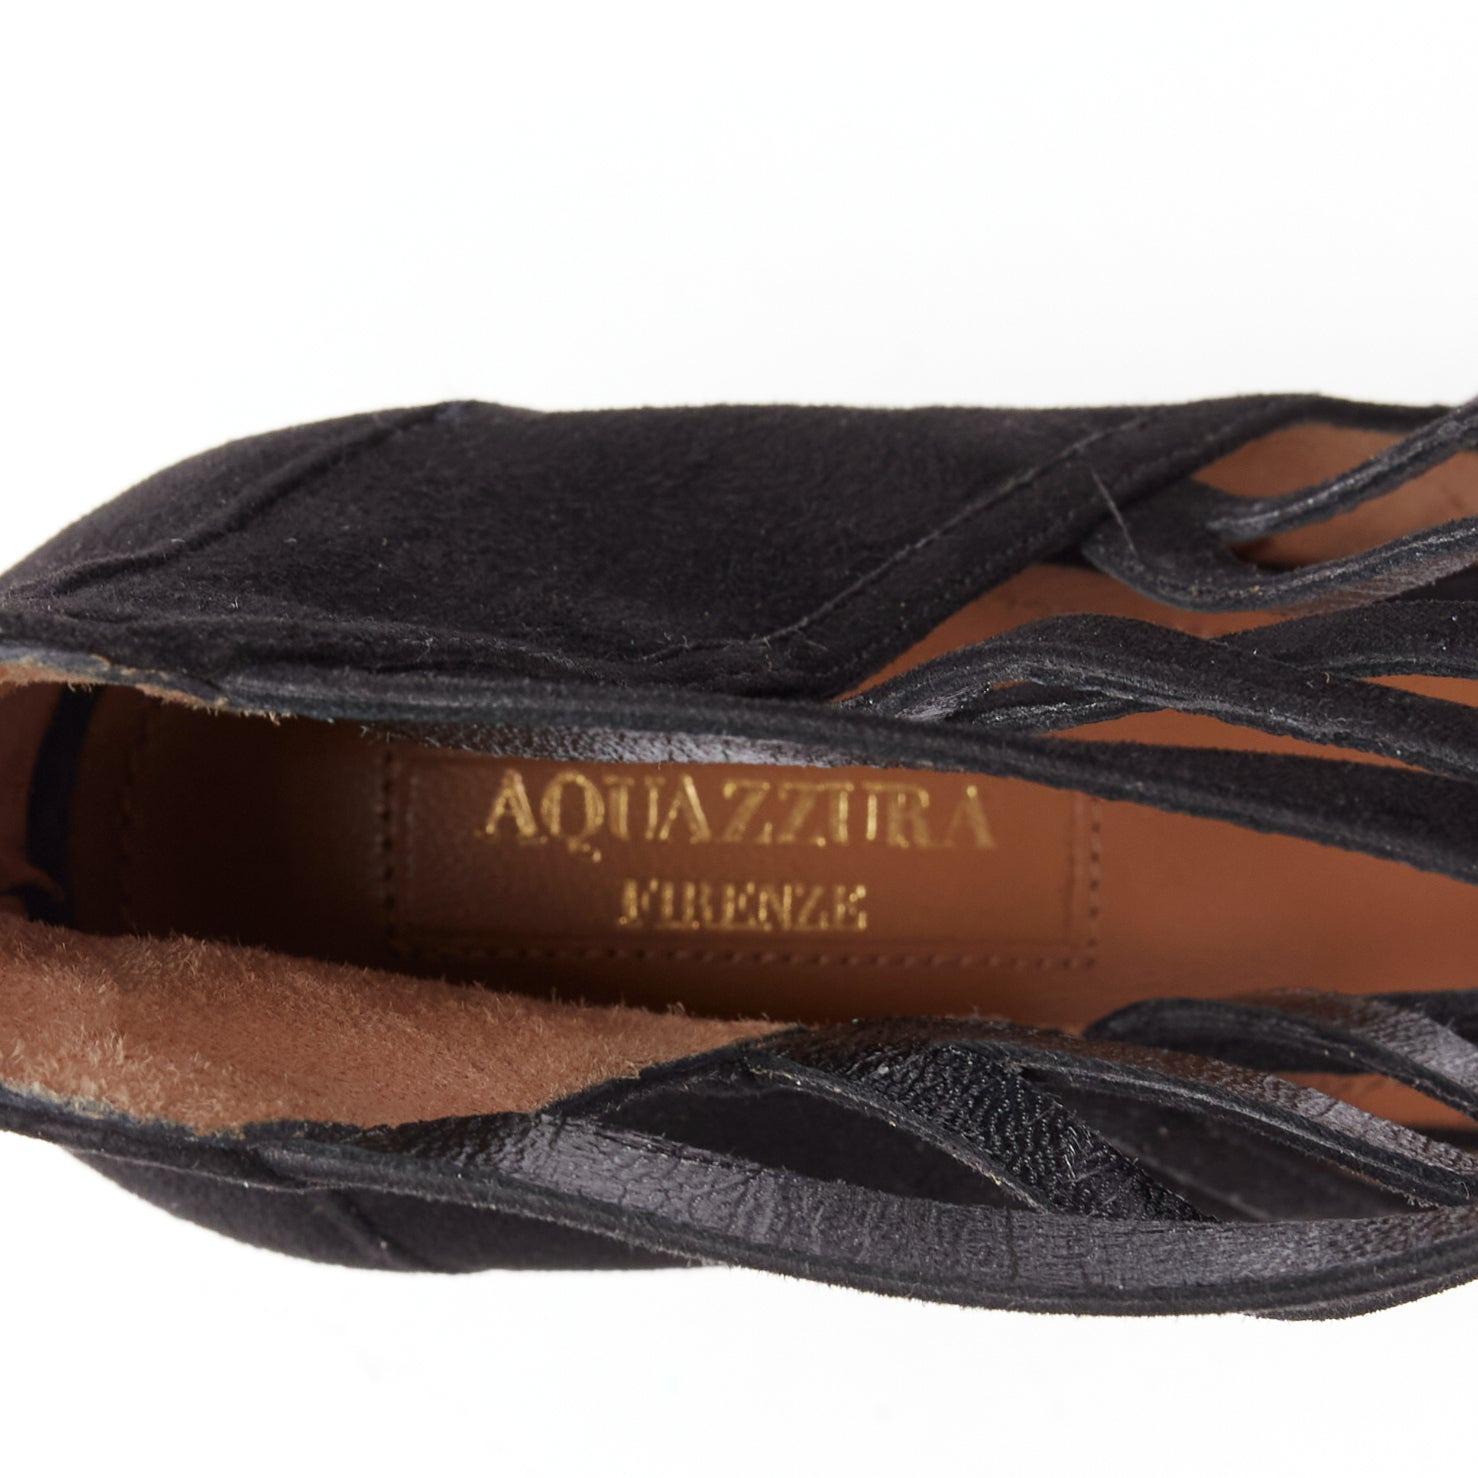 AQUAZZURA Electric black suede criss cross strappy booties pump EU38 For Sale 4